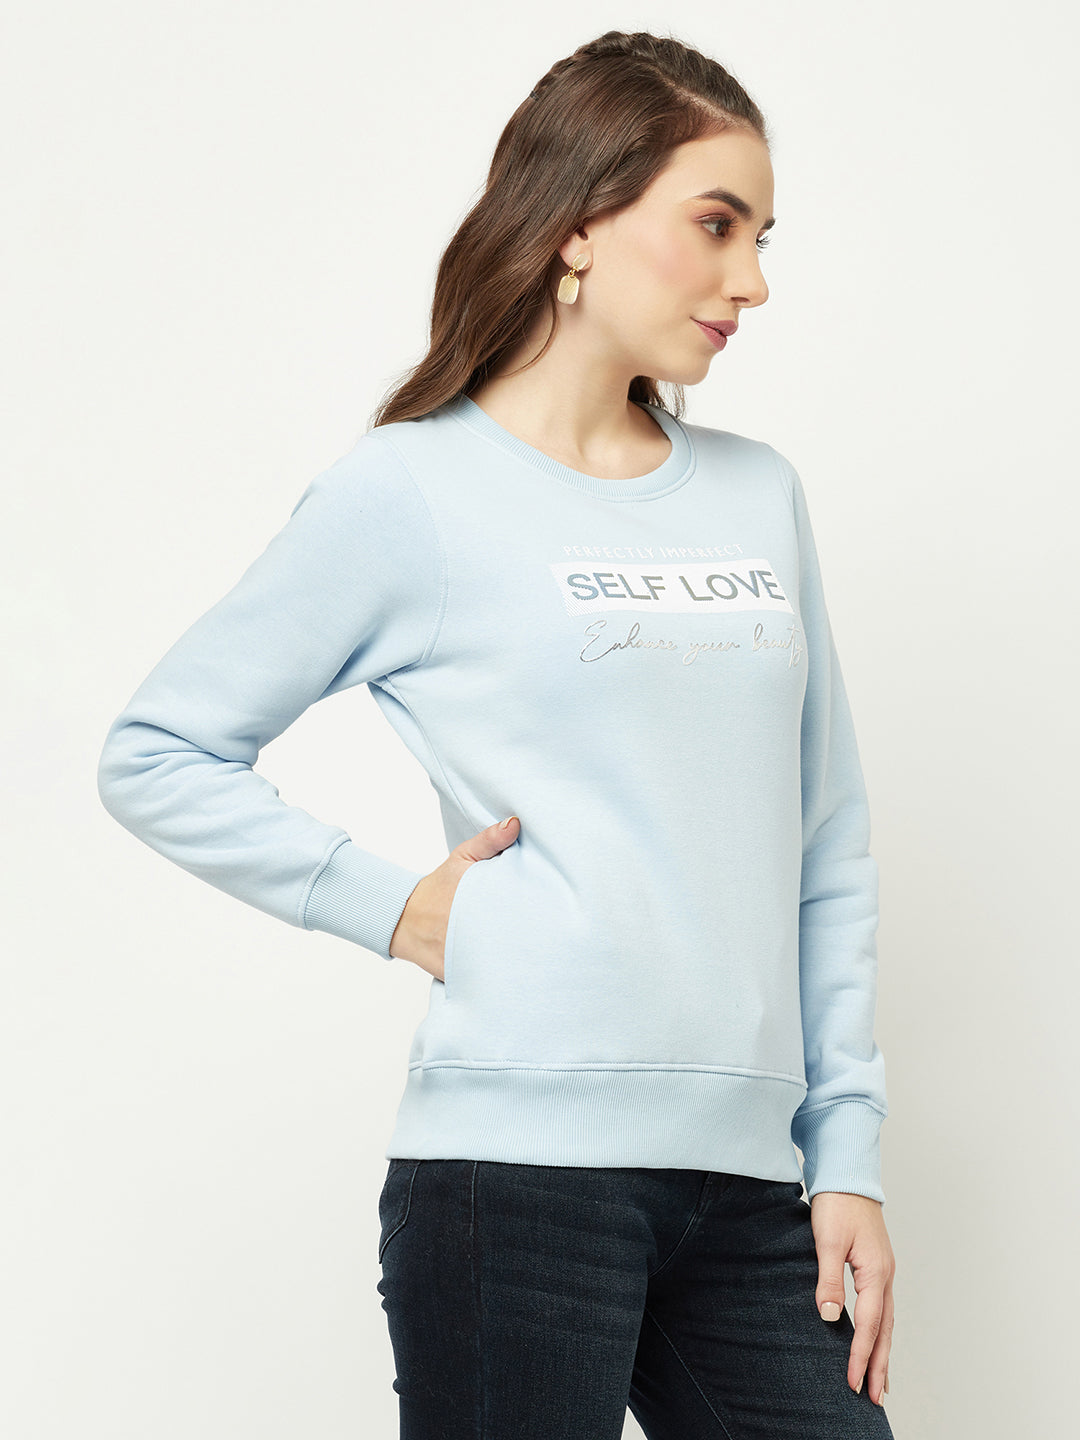  Light Baby Blue Typographic Sweatshirt 